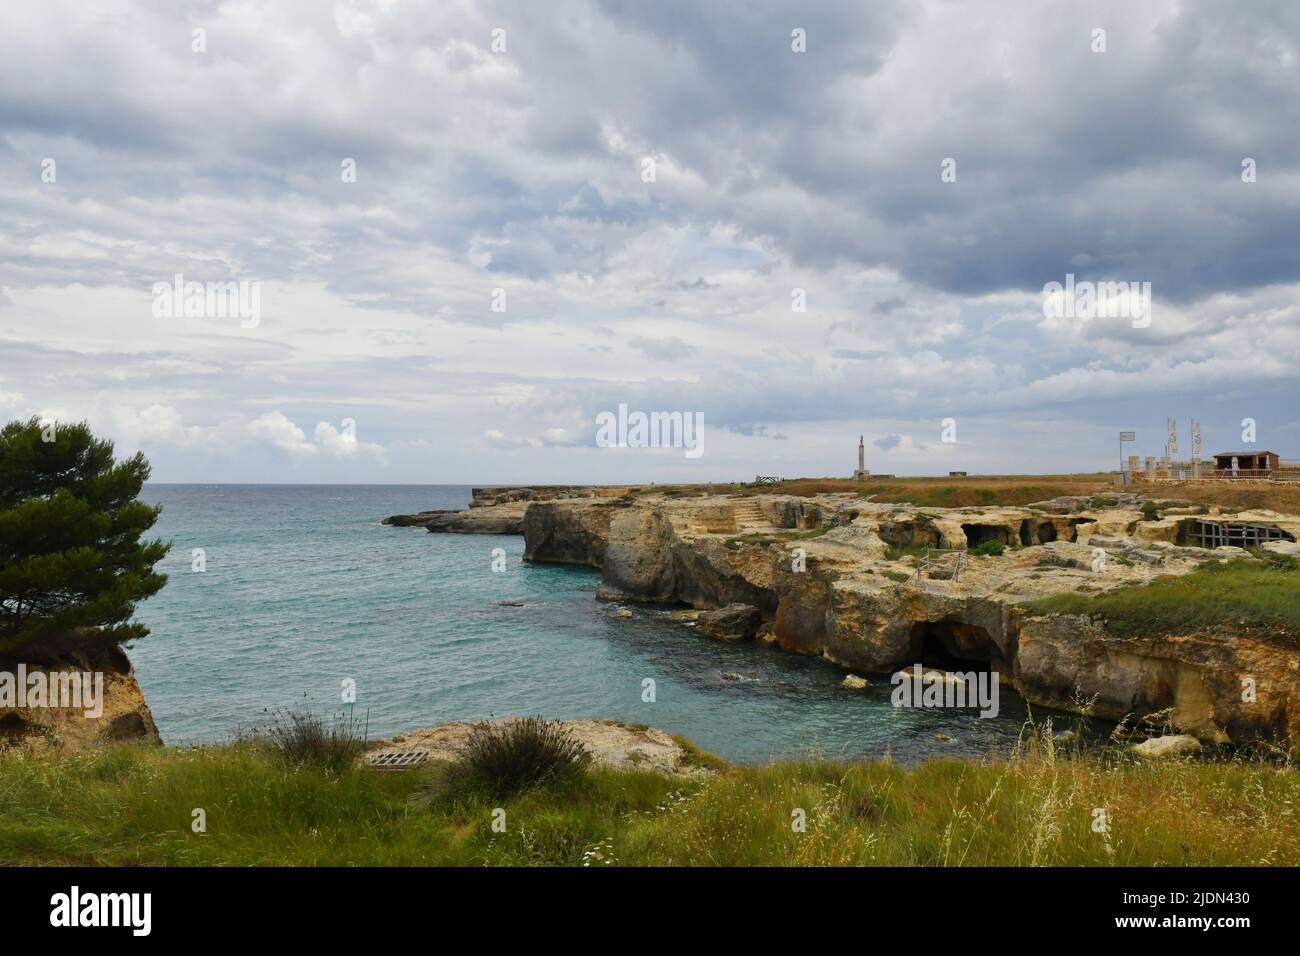 The coast of Santa Maria di Leuca, city in Puglia region, Italy. Stock Photo